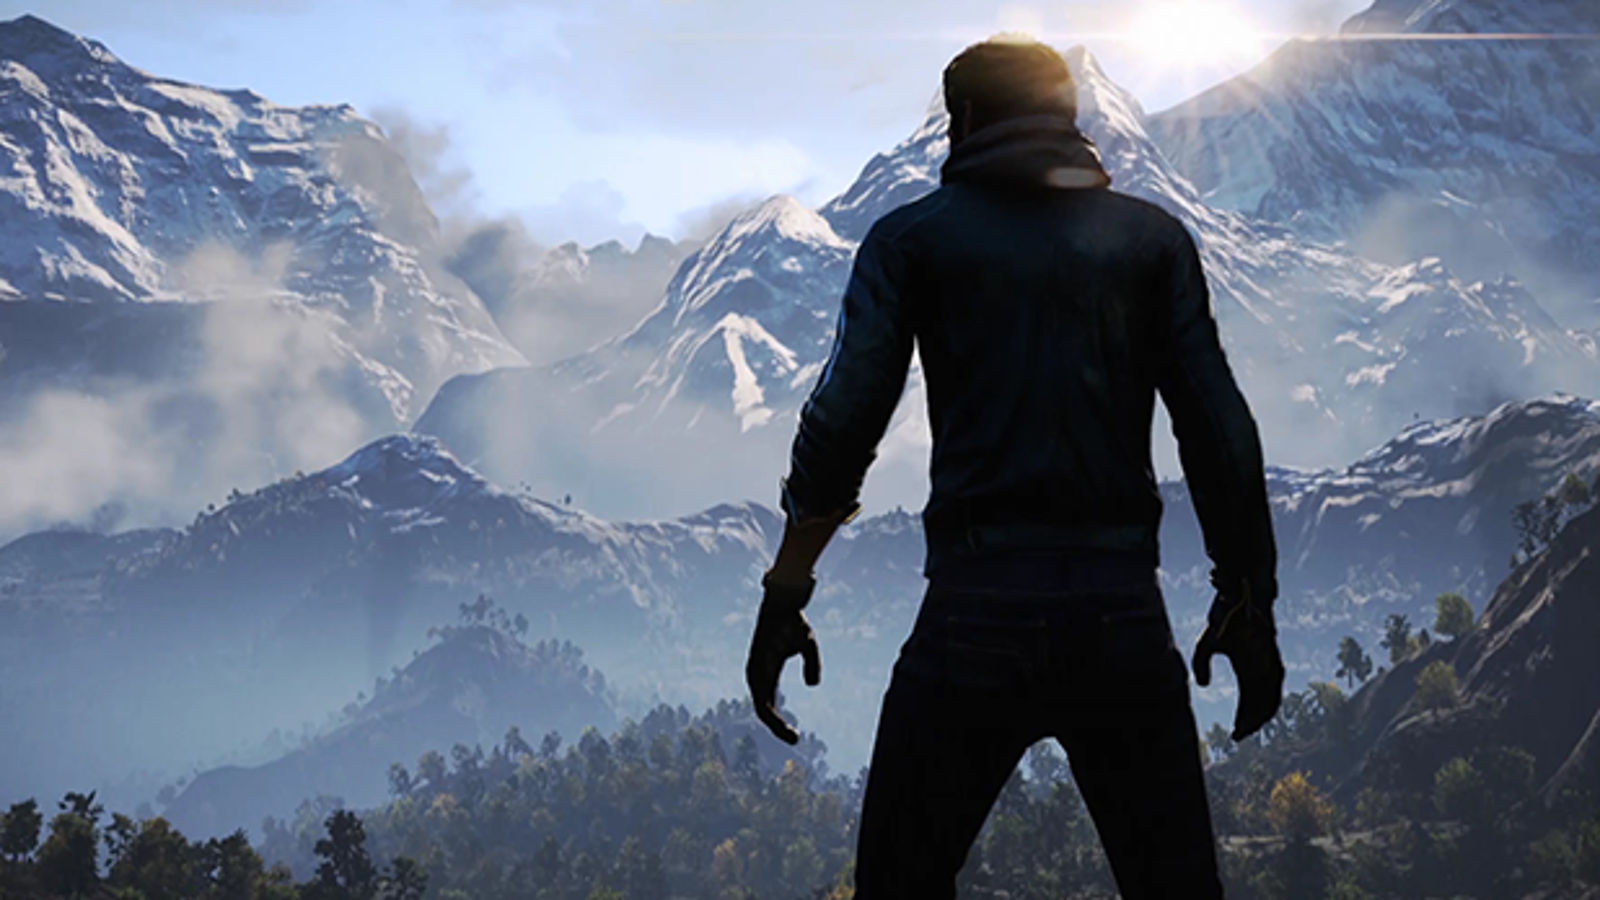 Far Cry 4 – Escape From Durgesh Prison Walkthrough